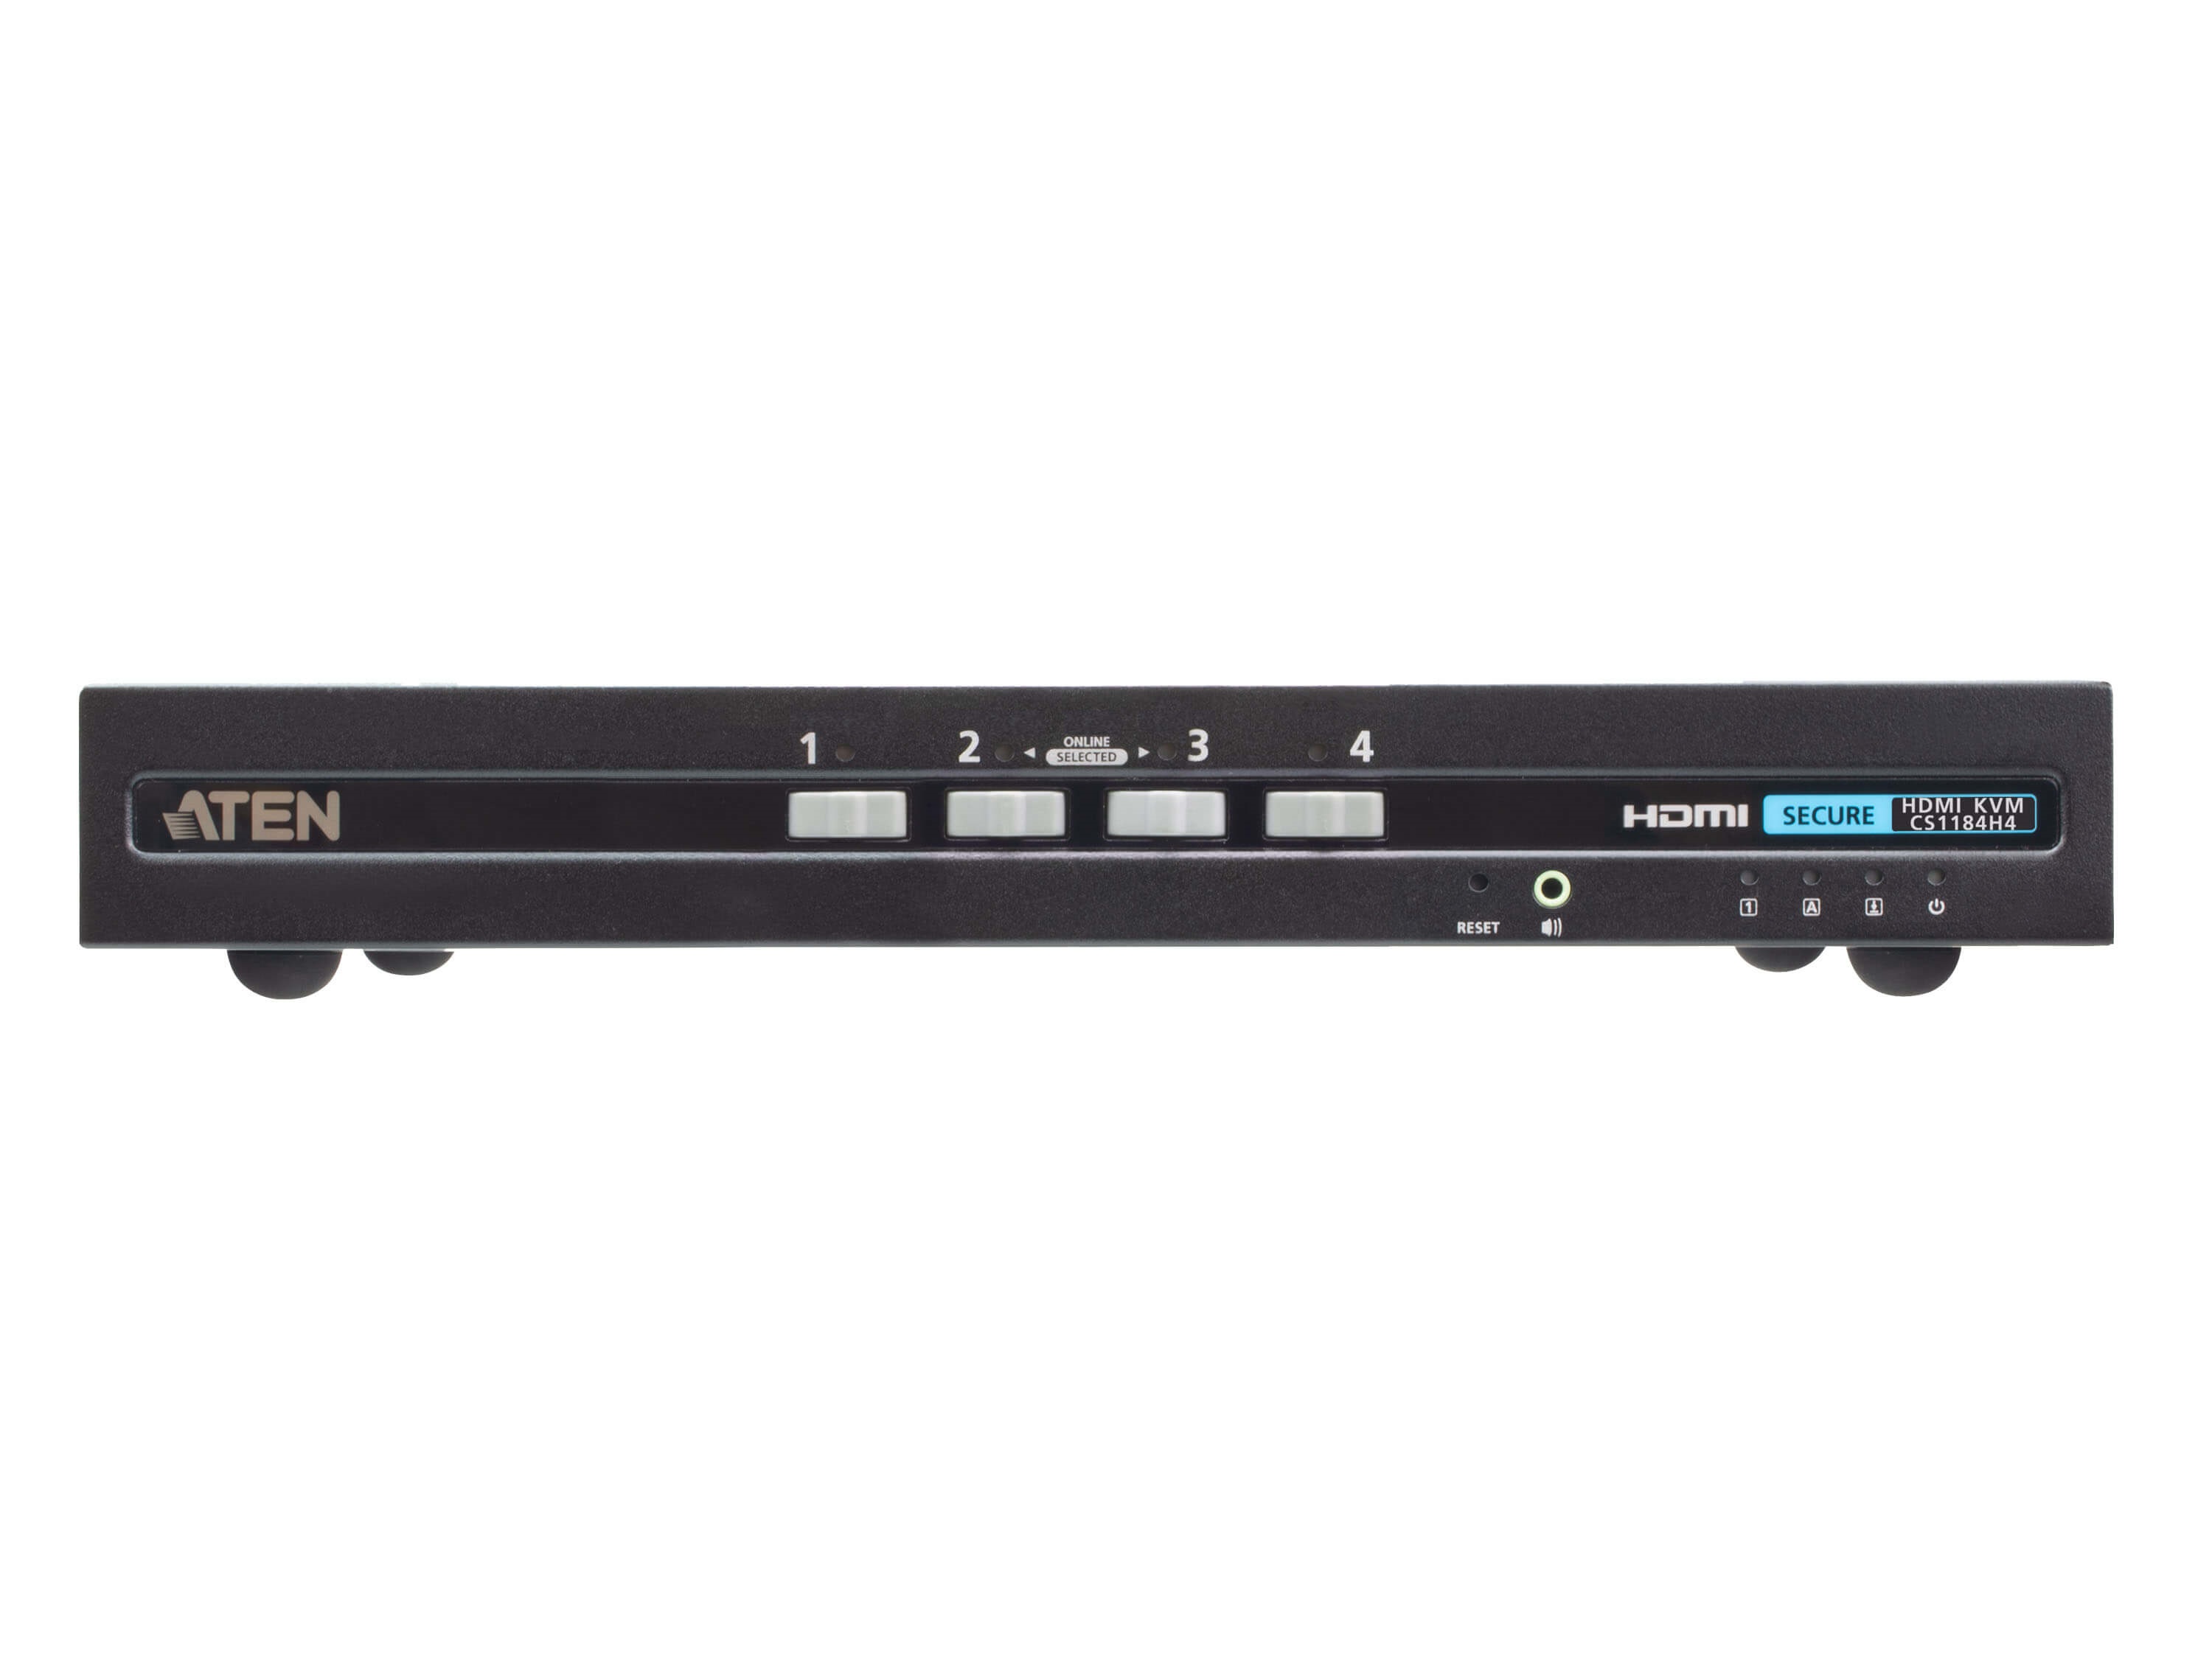 CS1184H4 4-Port USB HDMI Secure KVM Switch (PSD PP v4.0 Compliant) by Aten